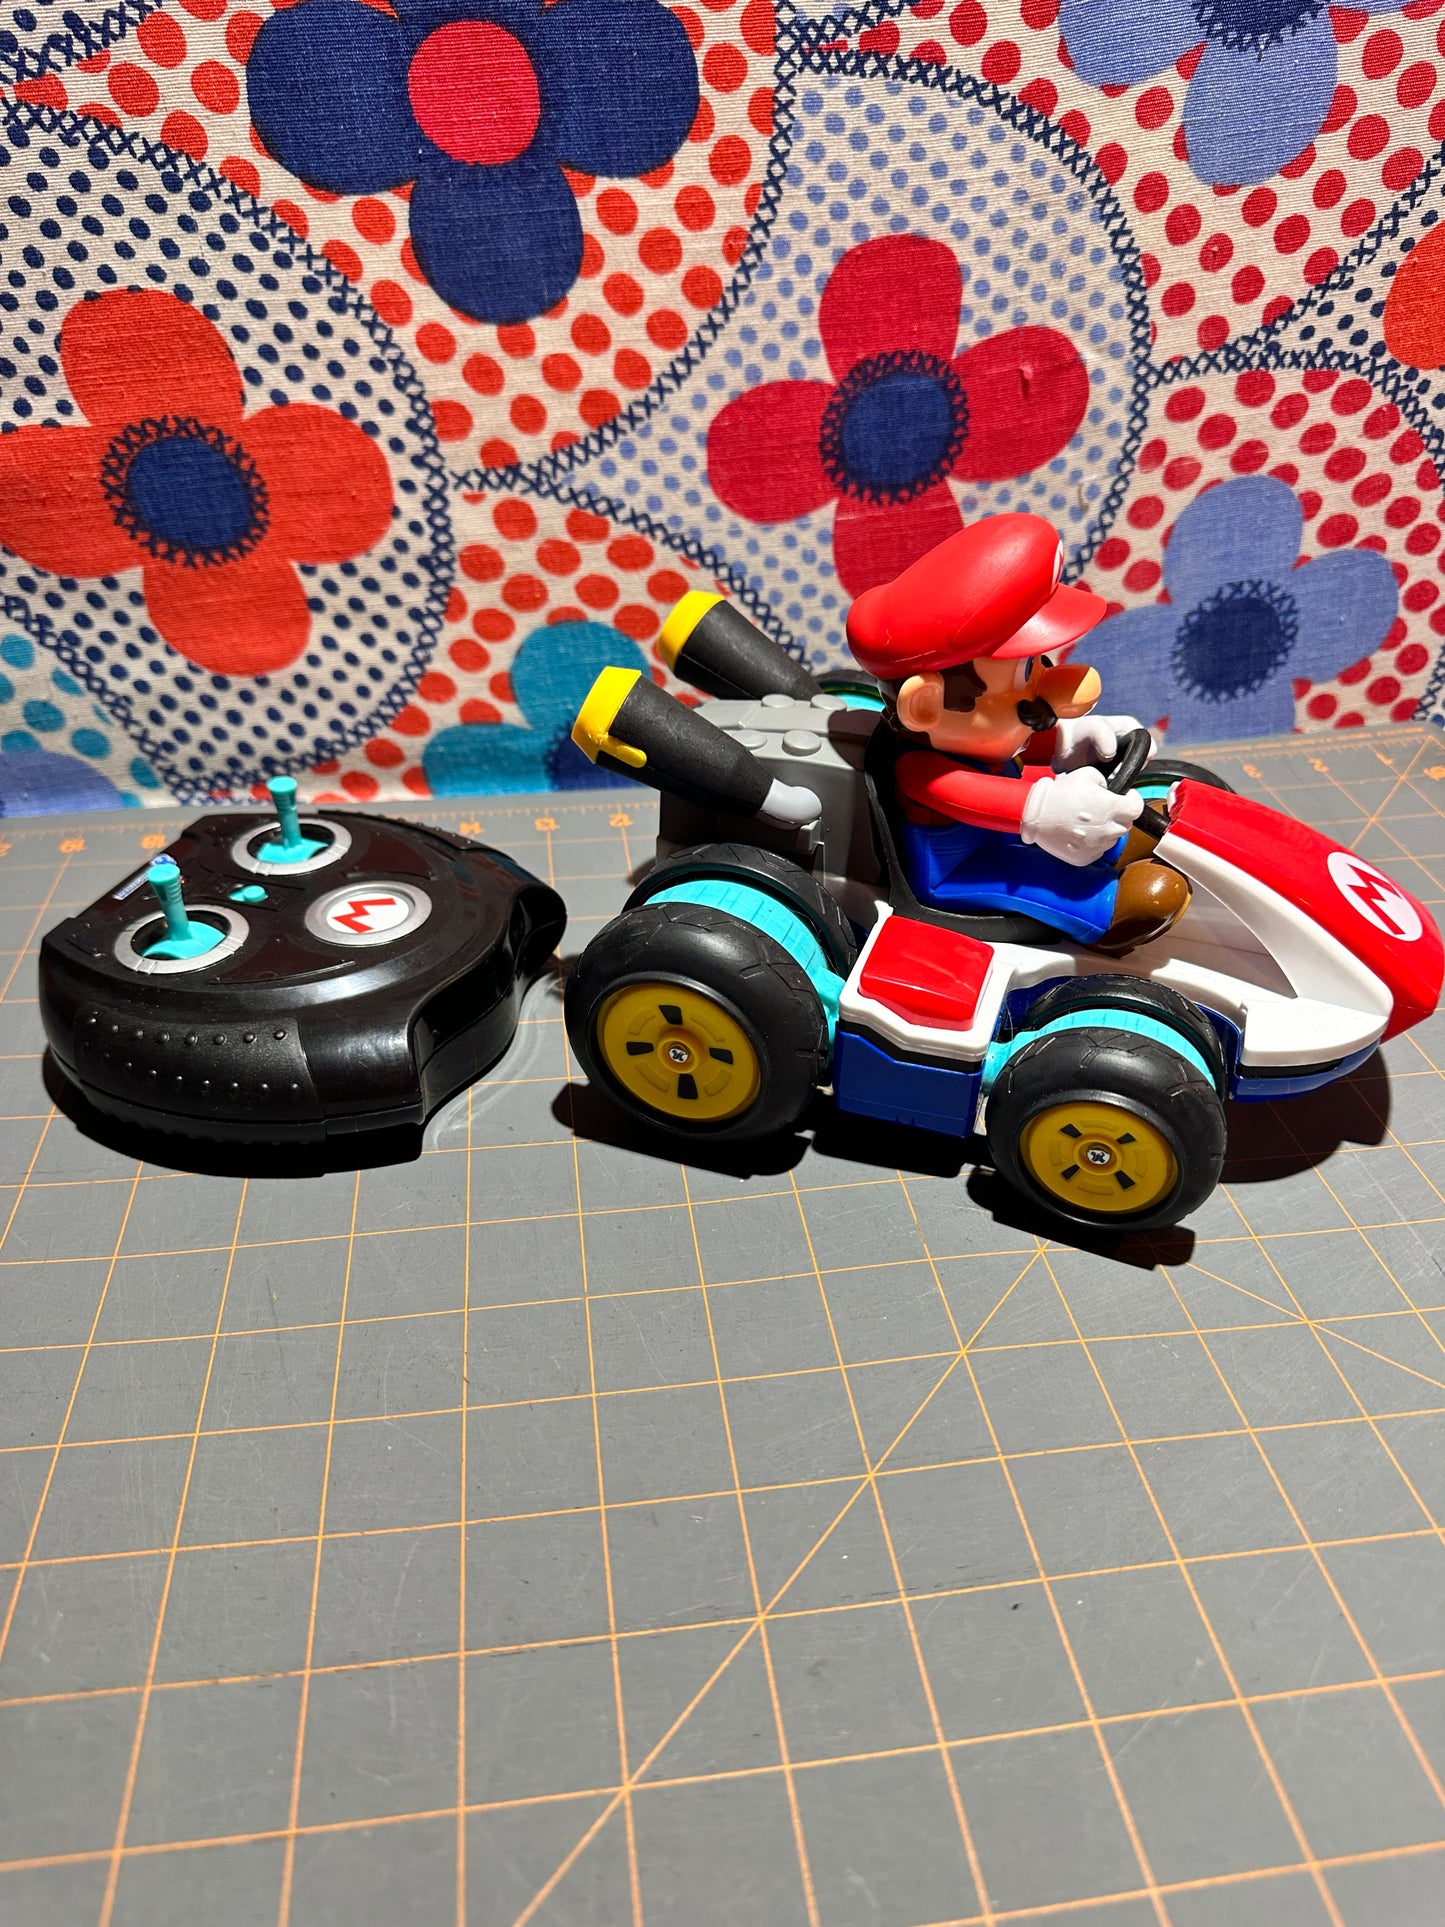 Super Mario Kart Remote Control Race Car with remote